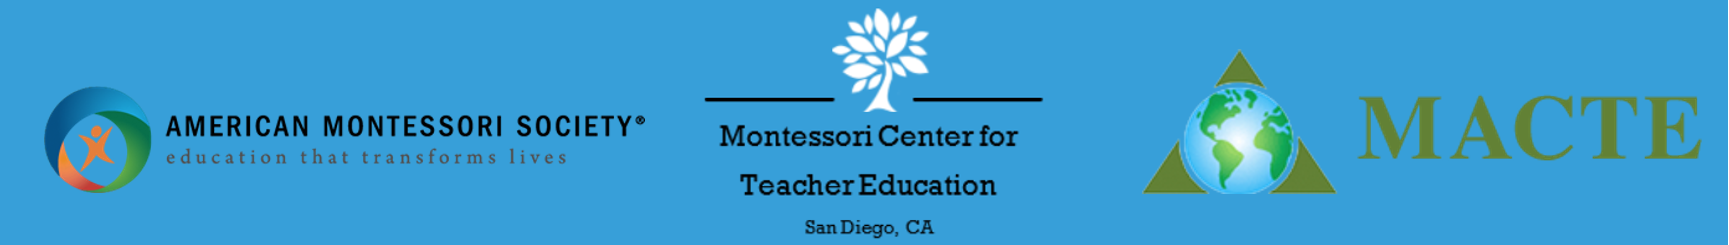 Montessori Center for Teacher Education